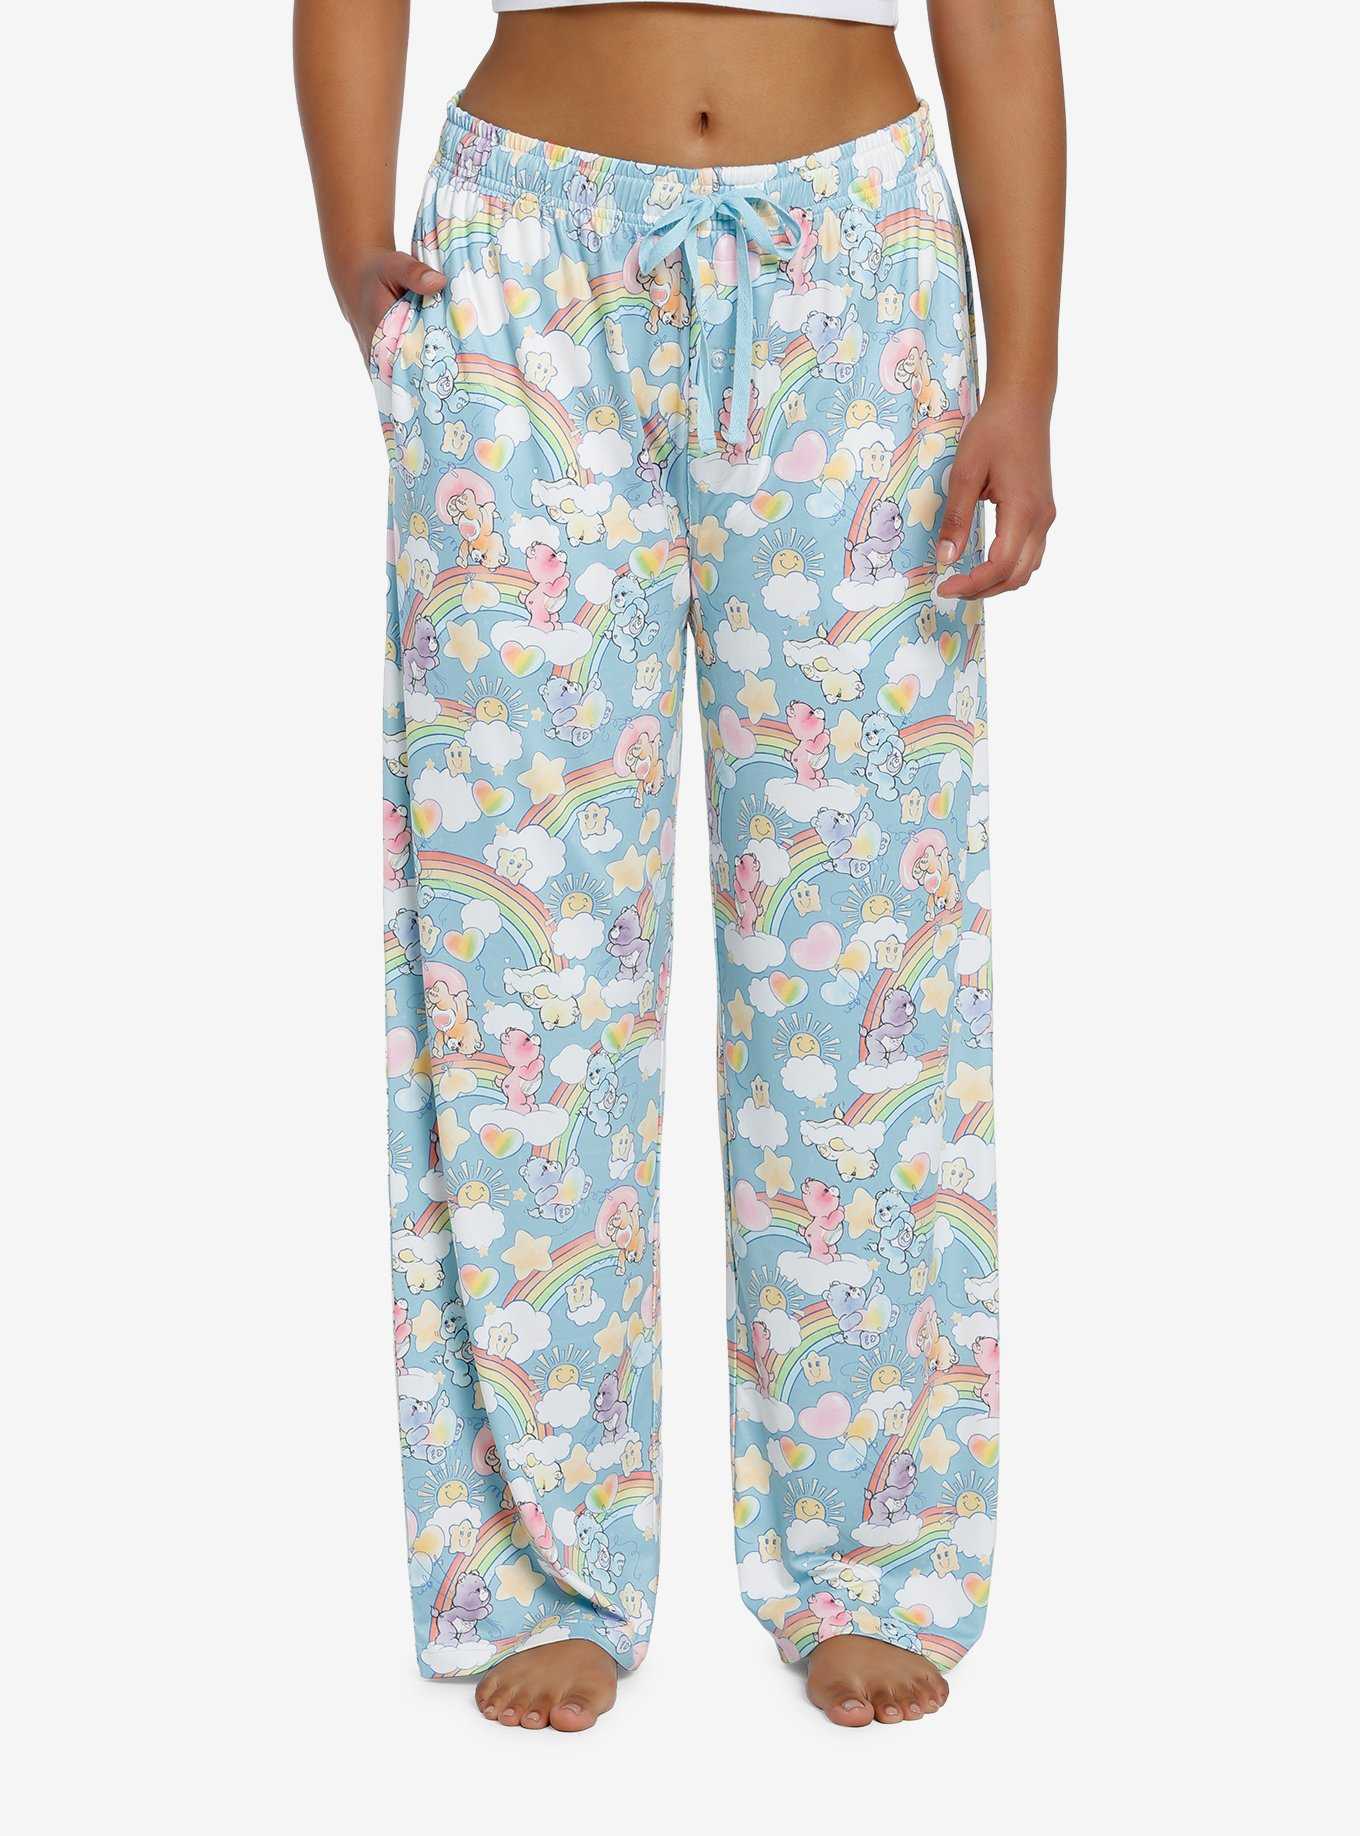 Hot Topic Care Bears Cousins Girls Pajama Pants Plus